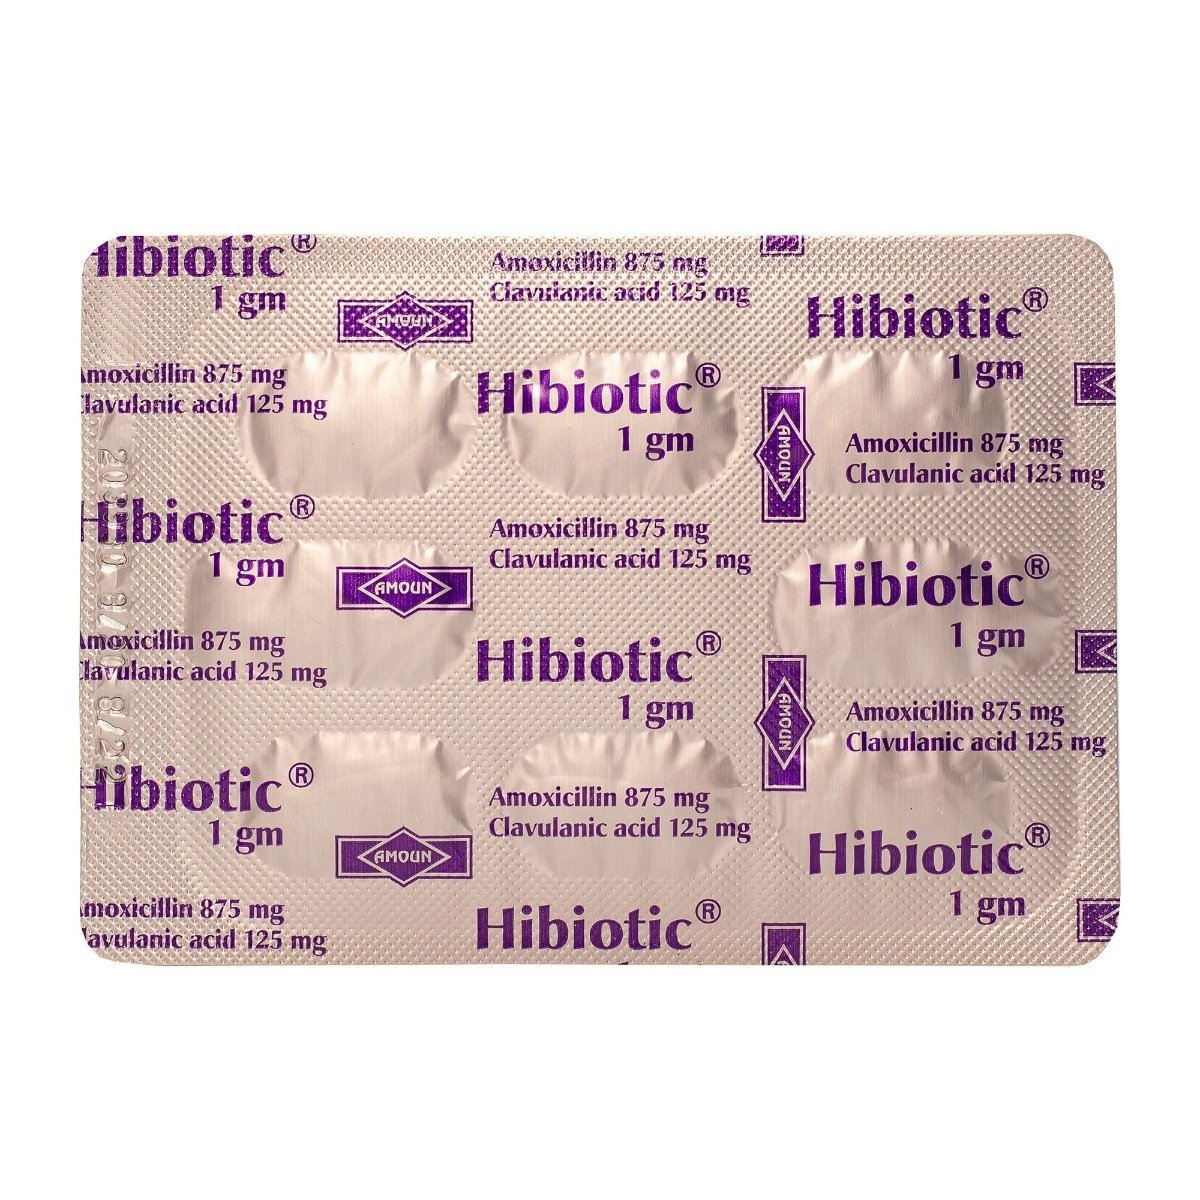 Hibiotic 1 gm - 16 Tablets